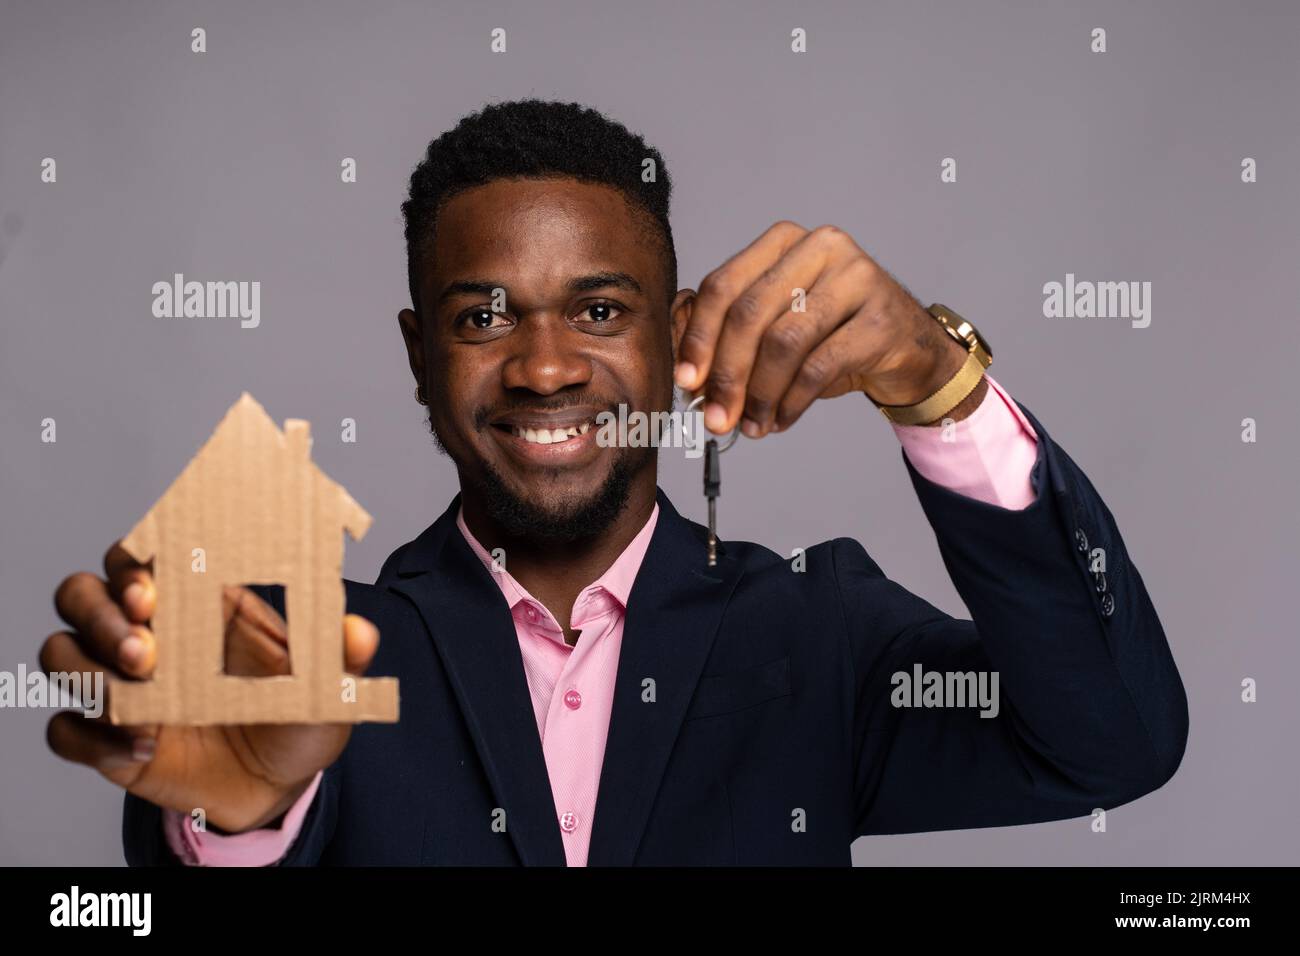 afrikanisches Immobilienmakler-Konzept Stockfoto